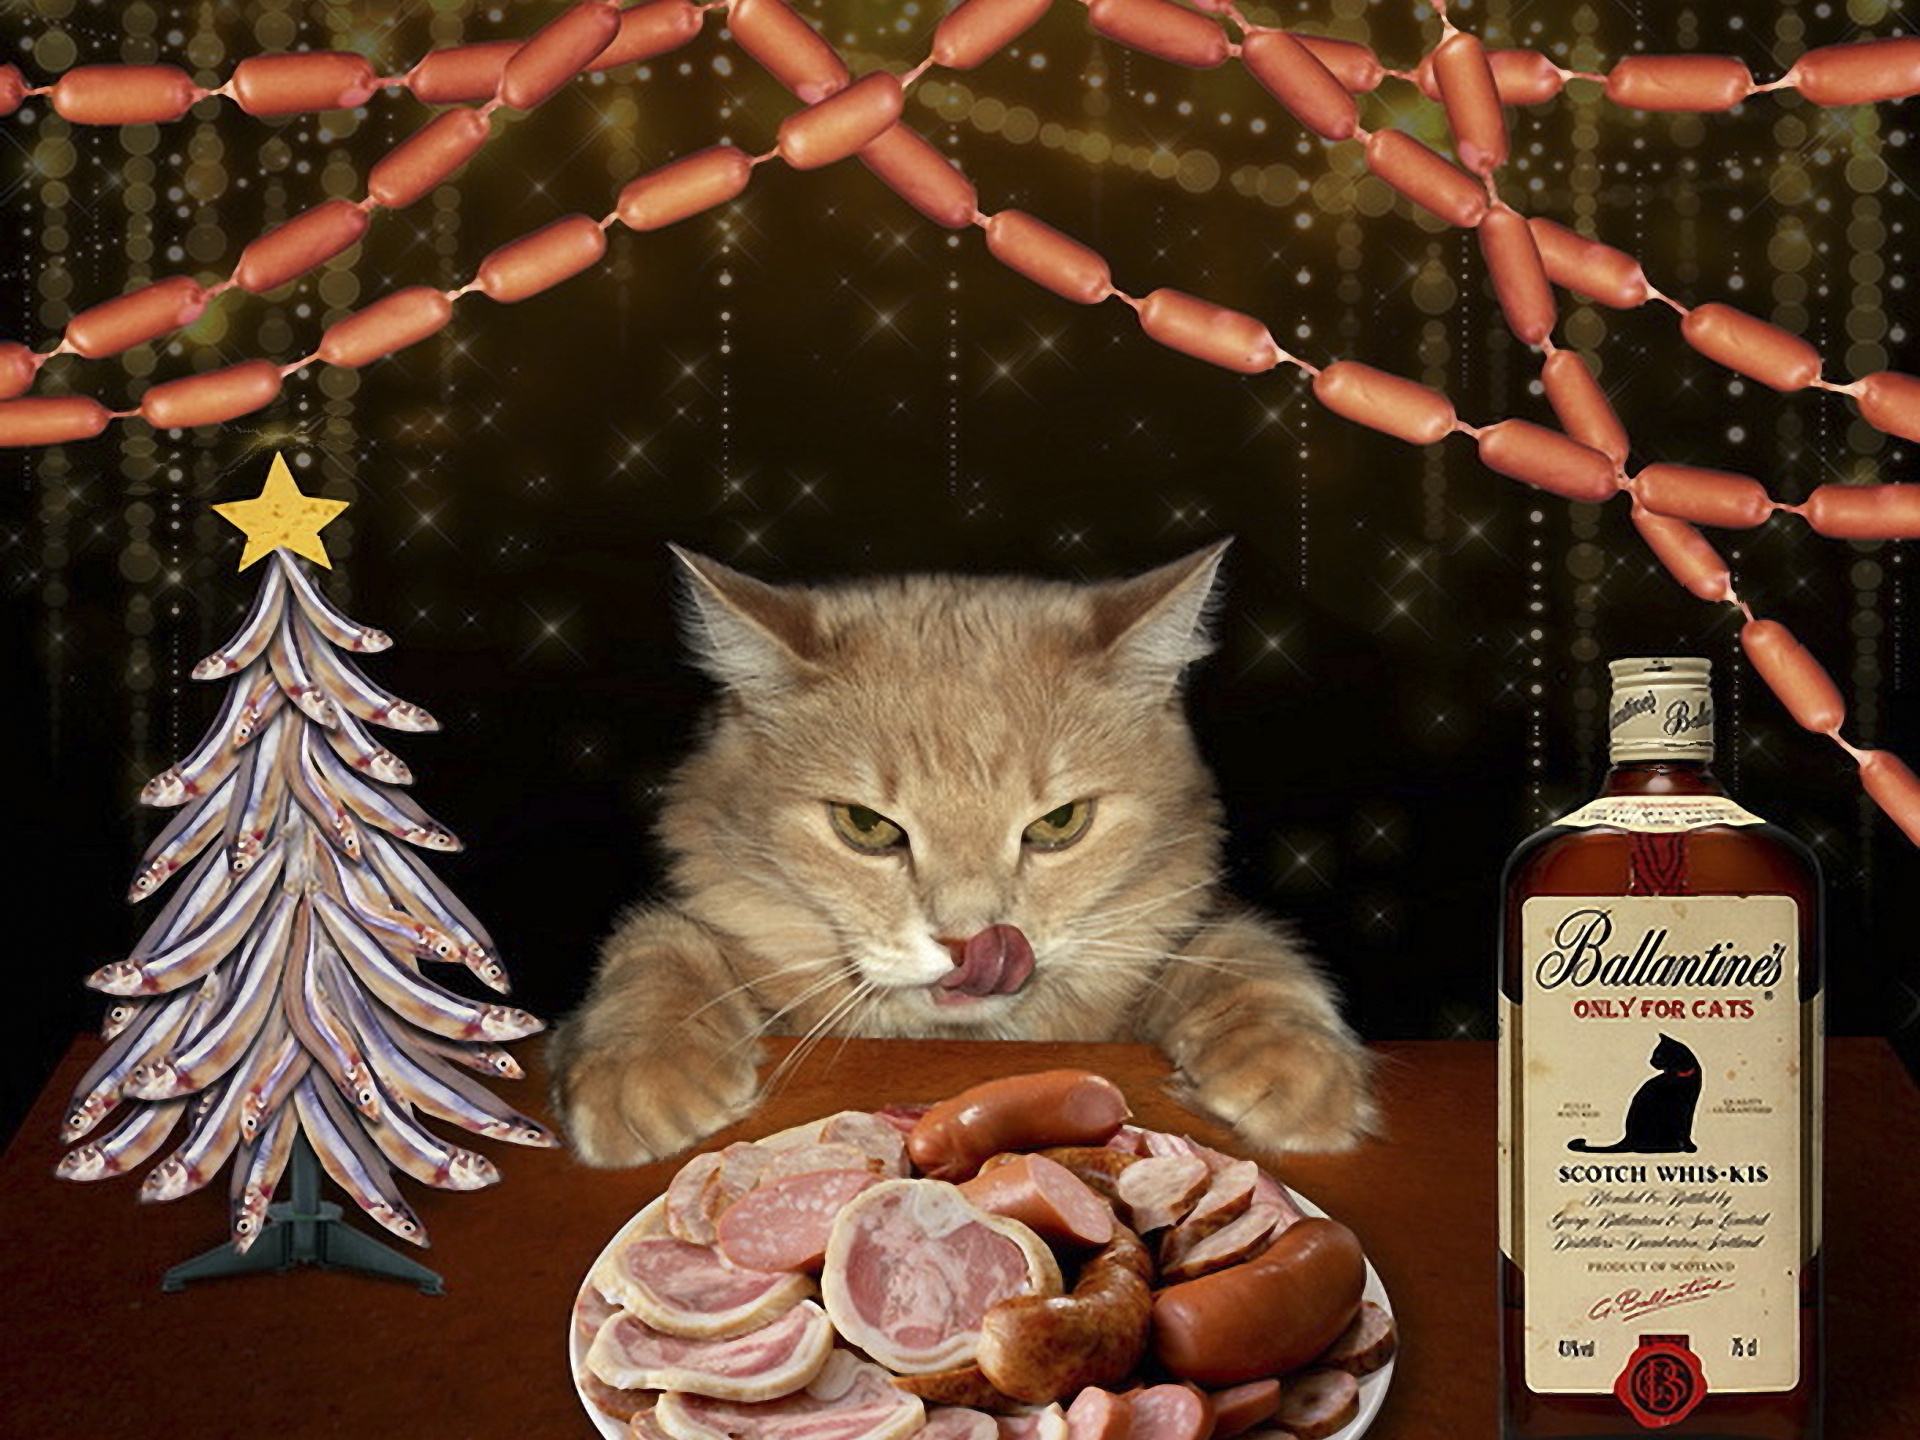 3d обои Кошачий новый год, тарелка с копченостями и сосисками, елка из рыбёшек, сосисочная гирлянда и кошачий скотч вис-кис (Bаllantines only for cats scotch whis-kis)  1920х1440 # 14827